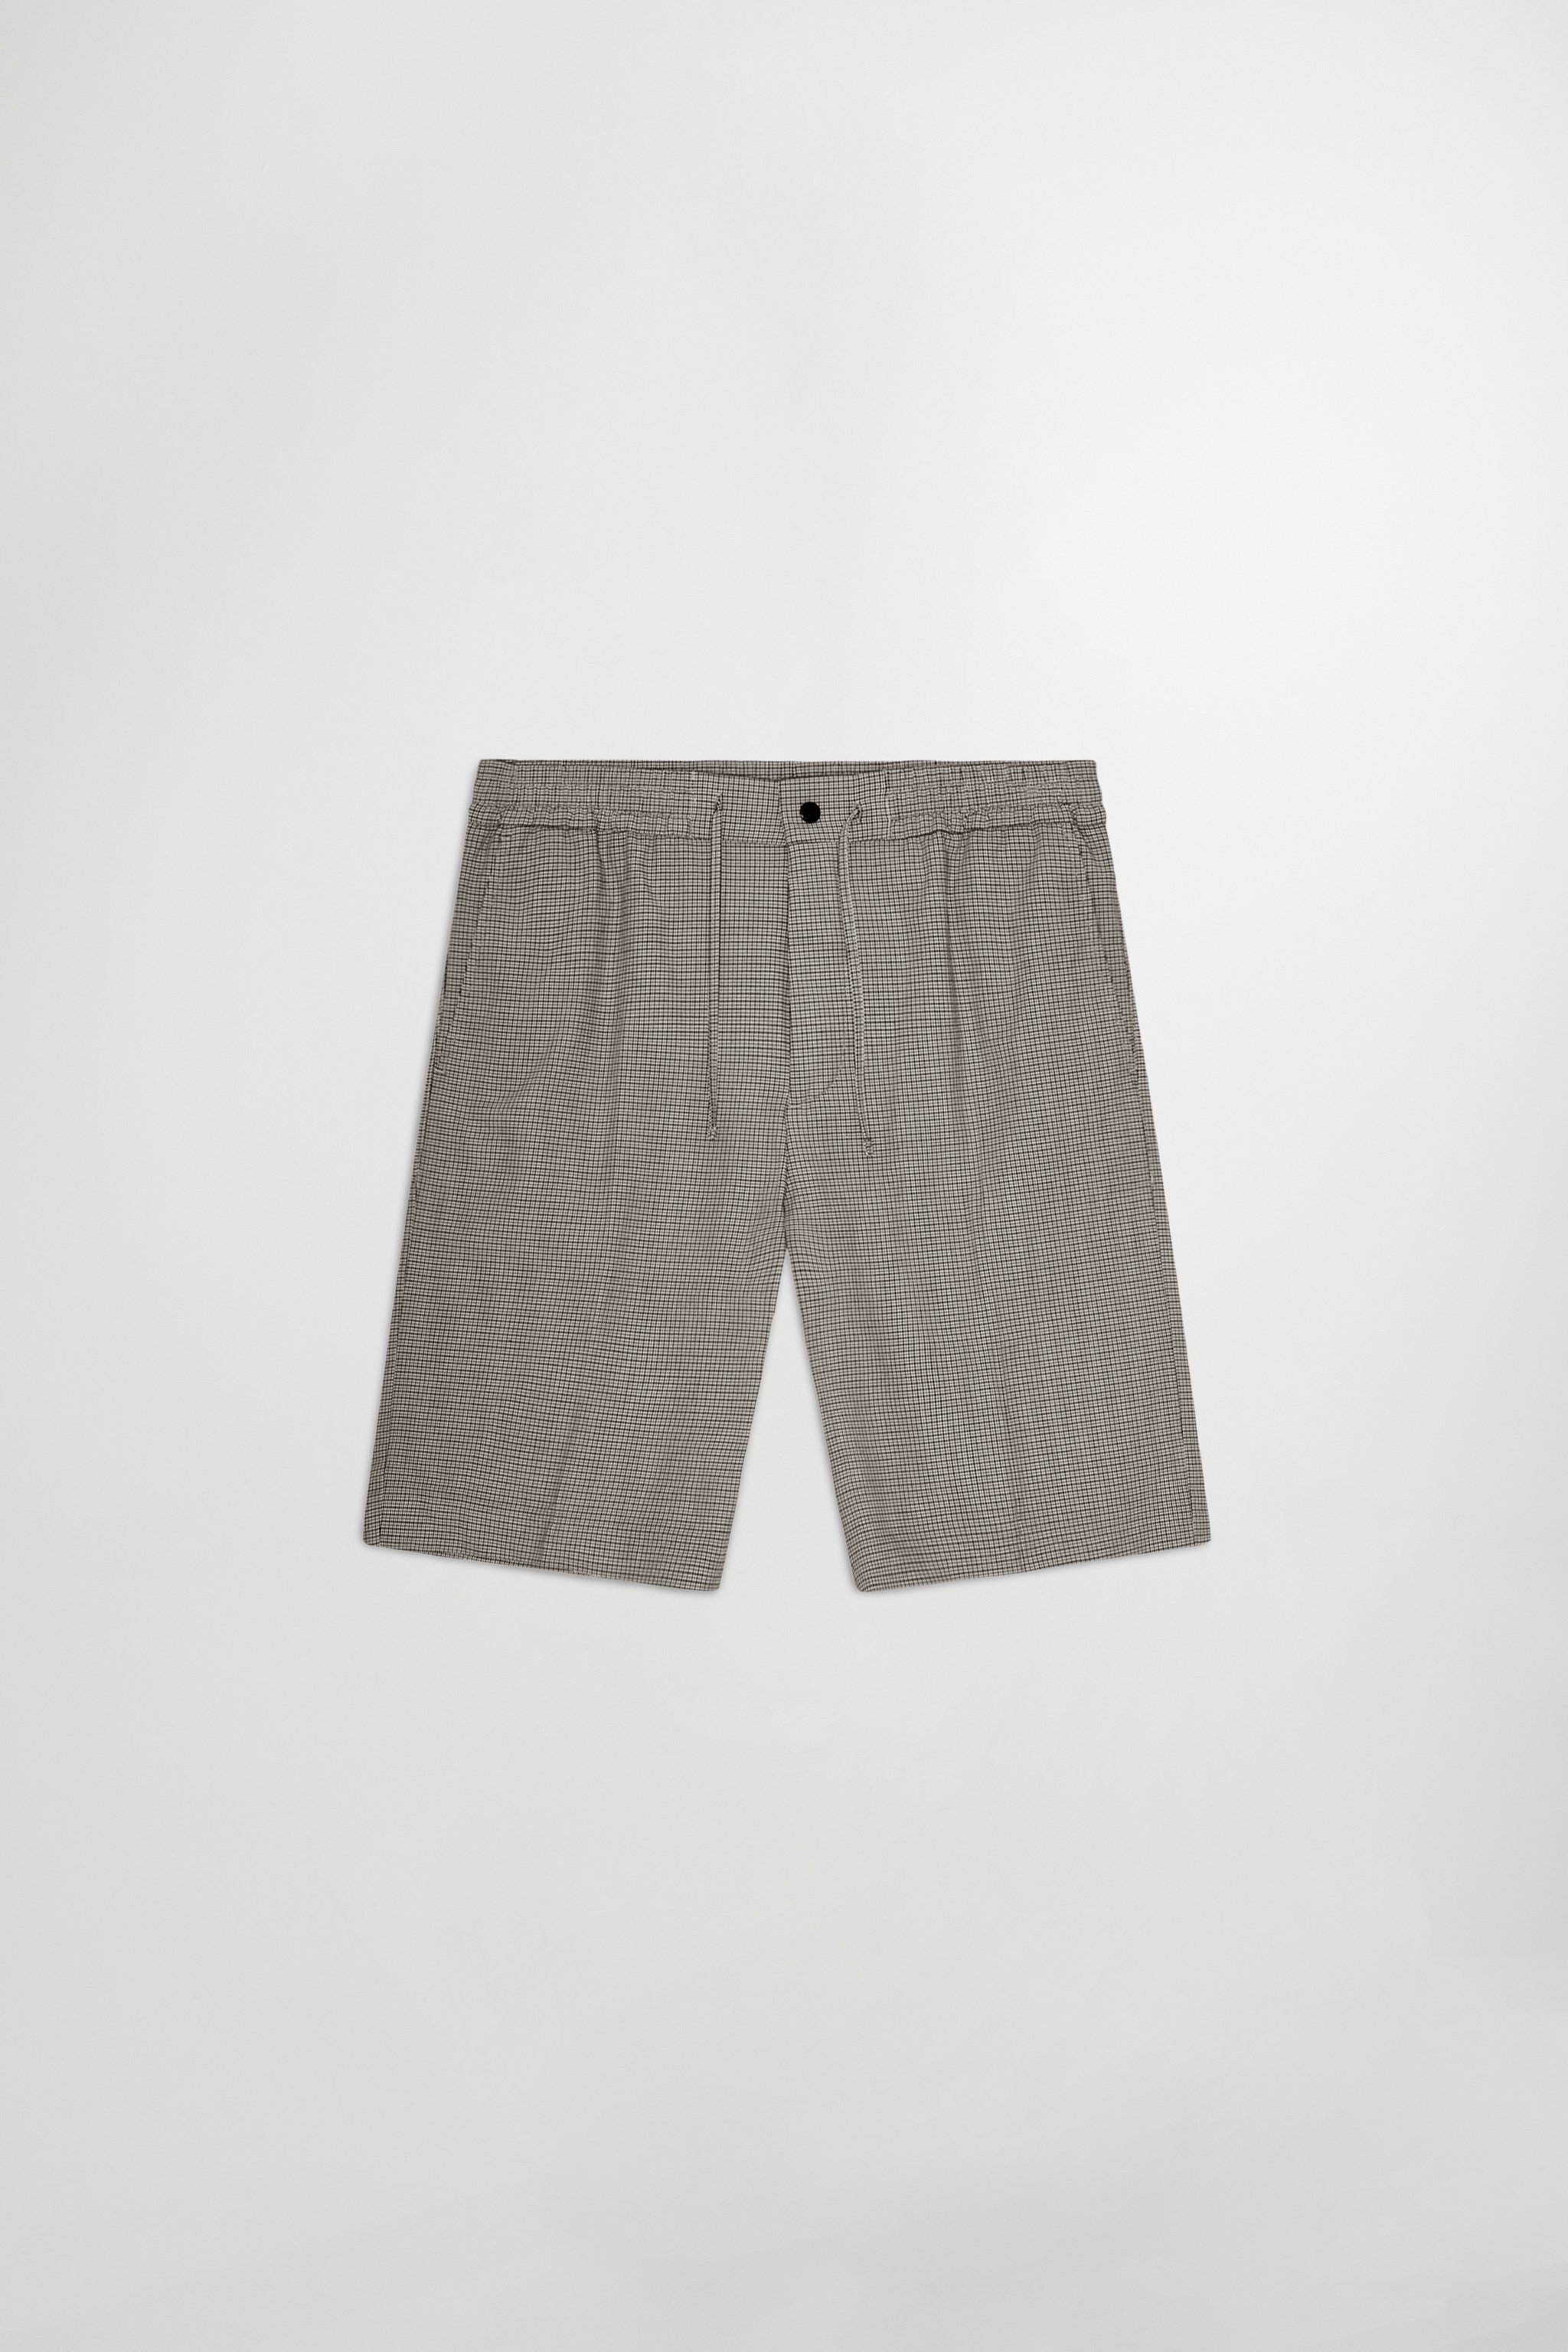 Crown 1196 men's shorts - Blue - Buy online at NN.07®